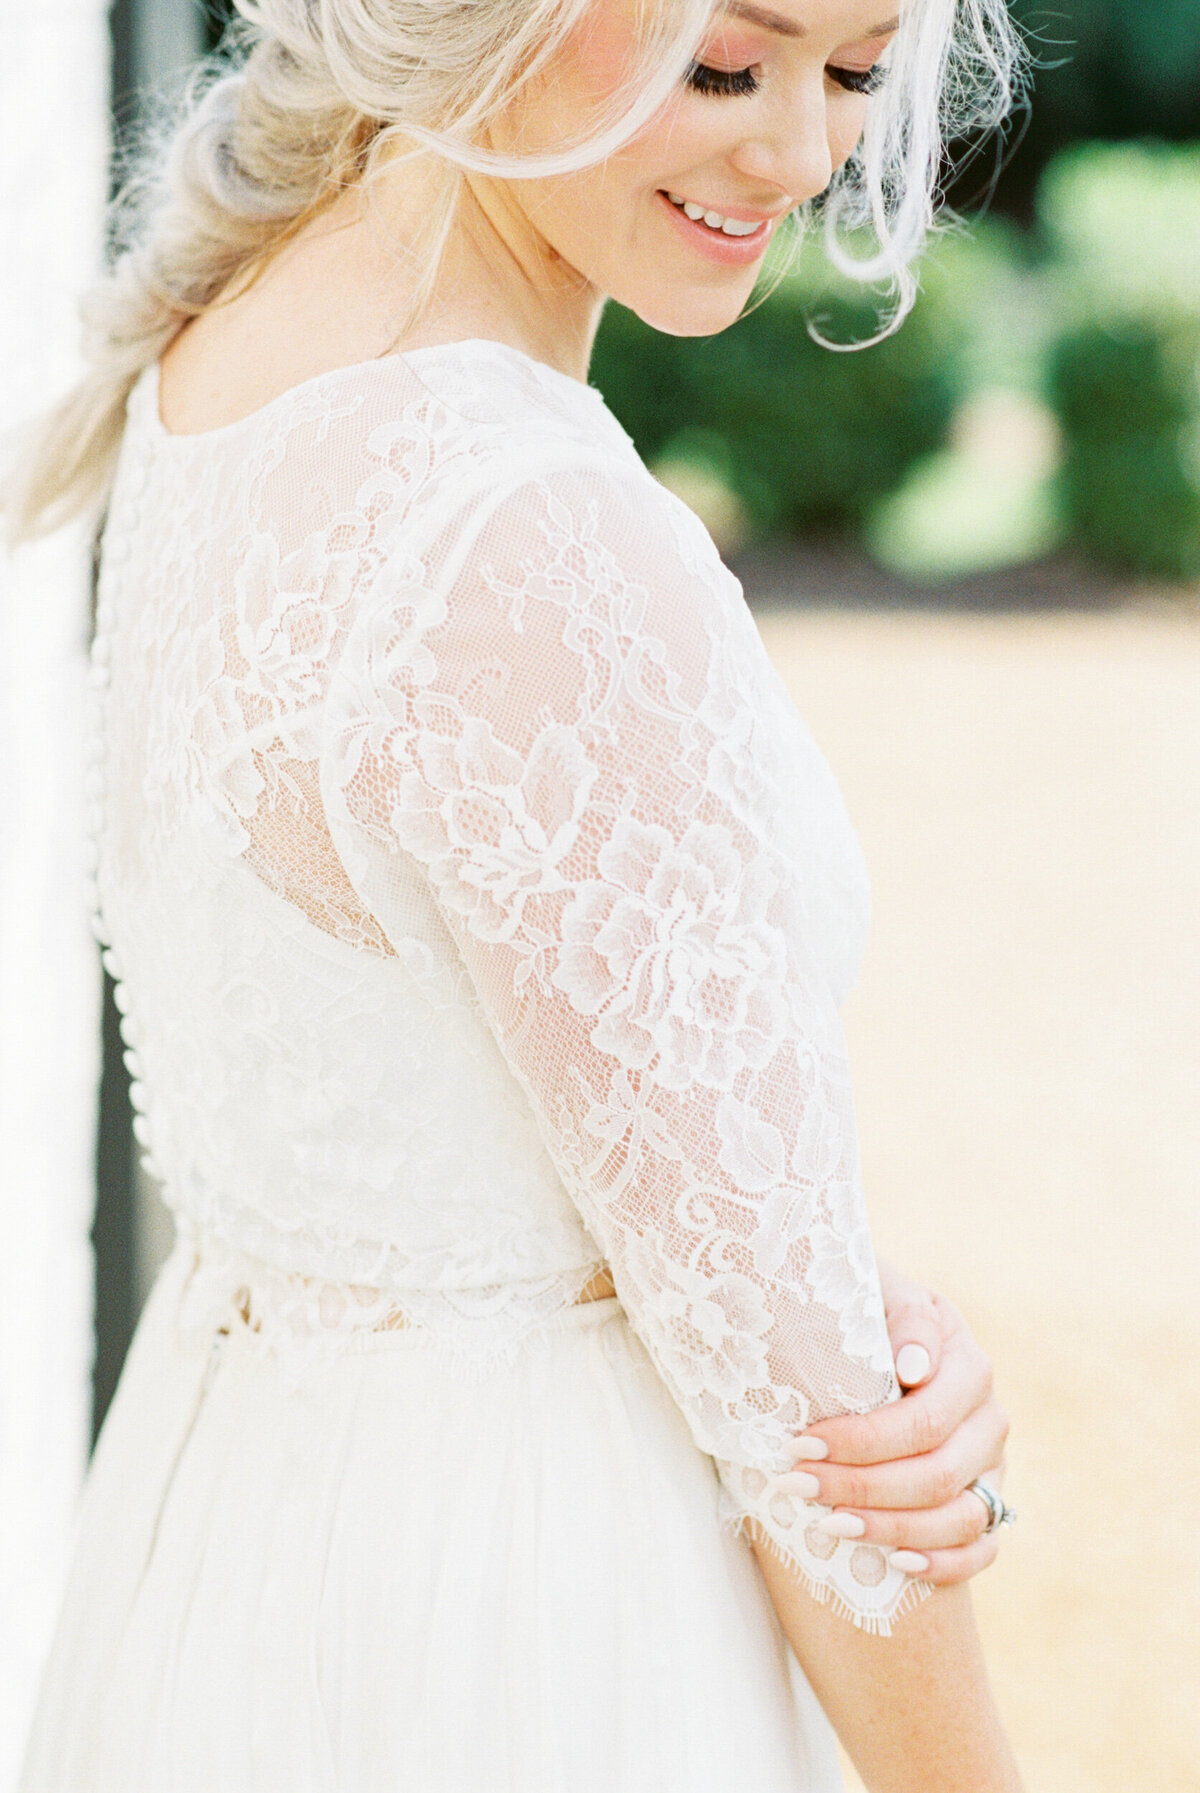 Alexandra-Blackmon-Photography-Charlotte-wedding-photographer-1